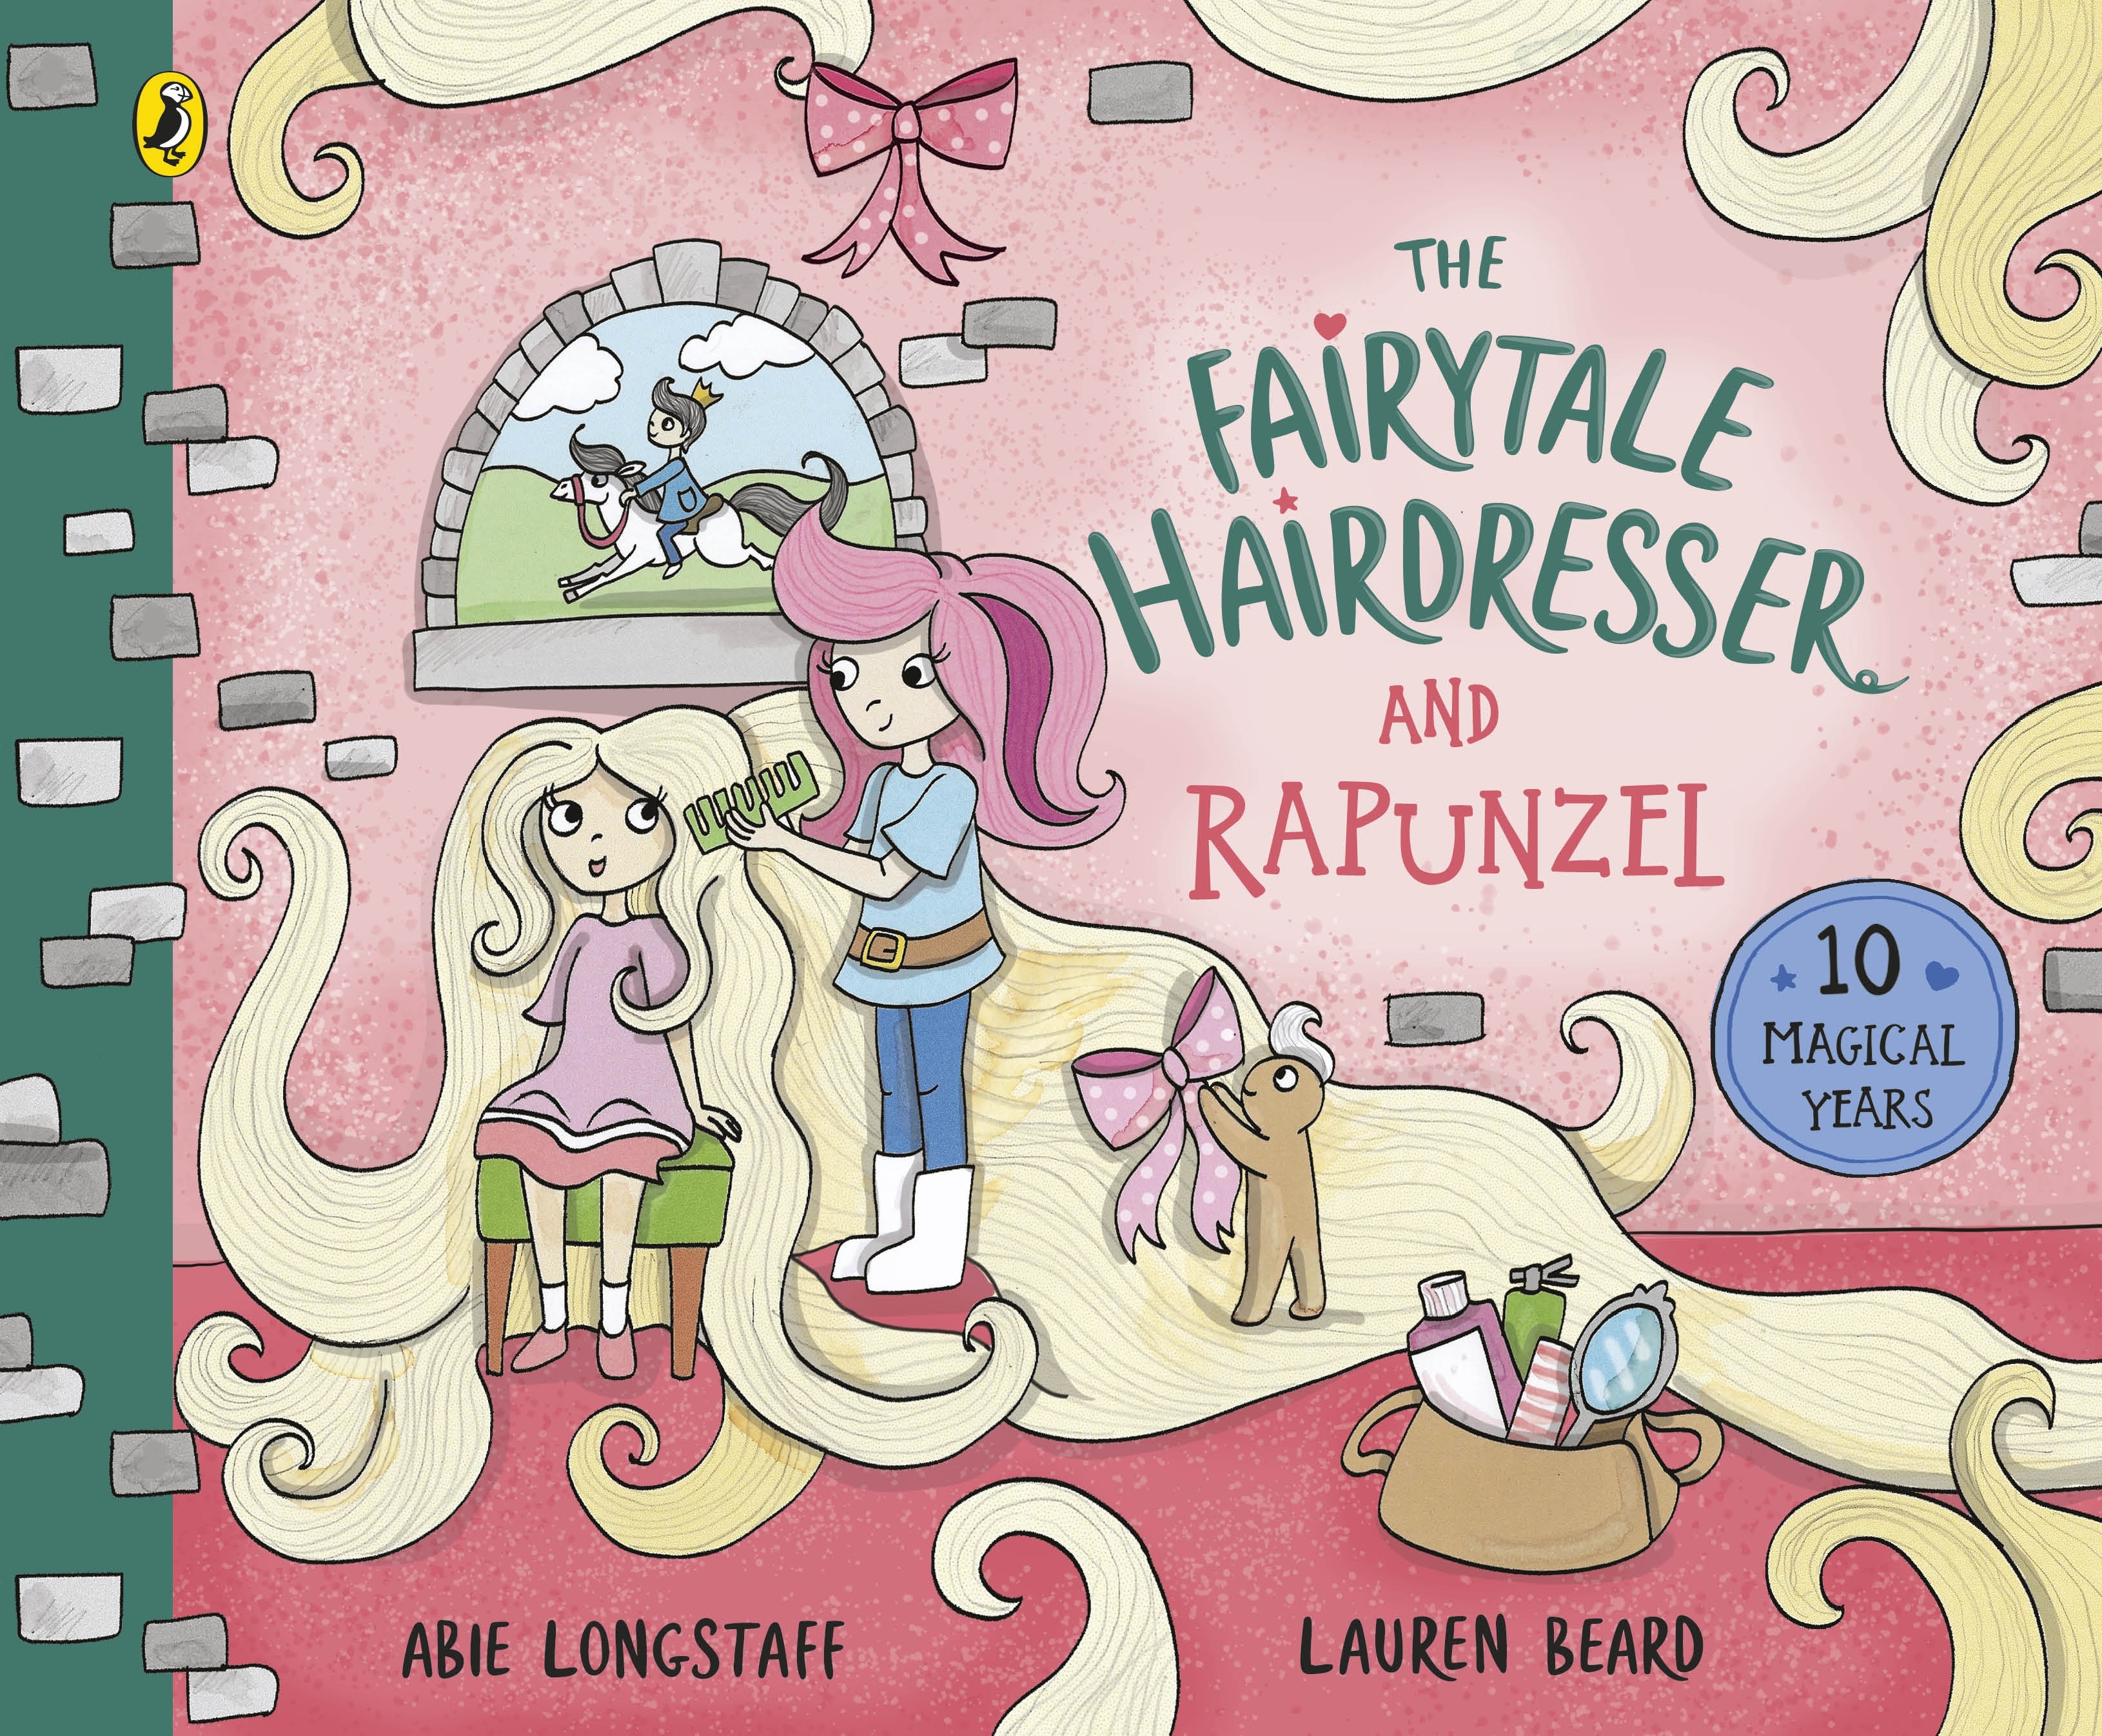 Book “The Fairytale Hairdresser and Rapunzel” by Abie Longstaff, Lauren Beard — September 30, 2021